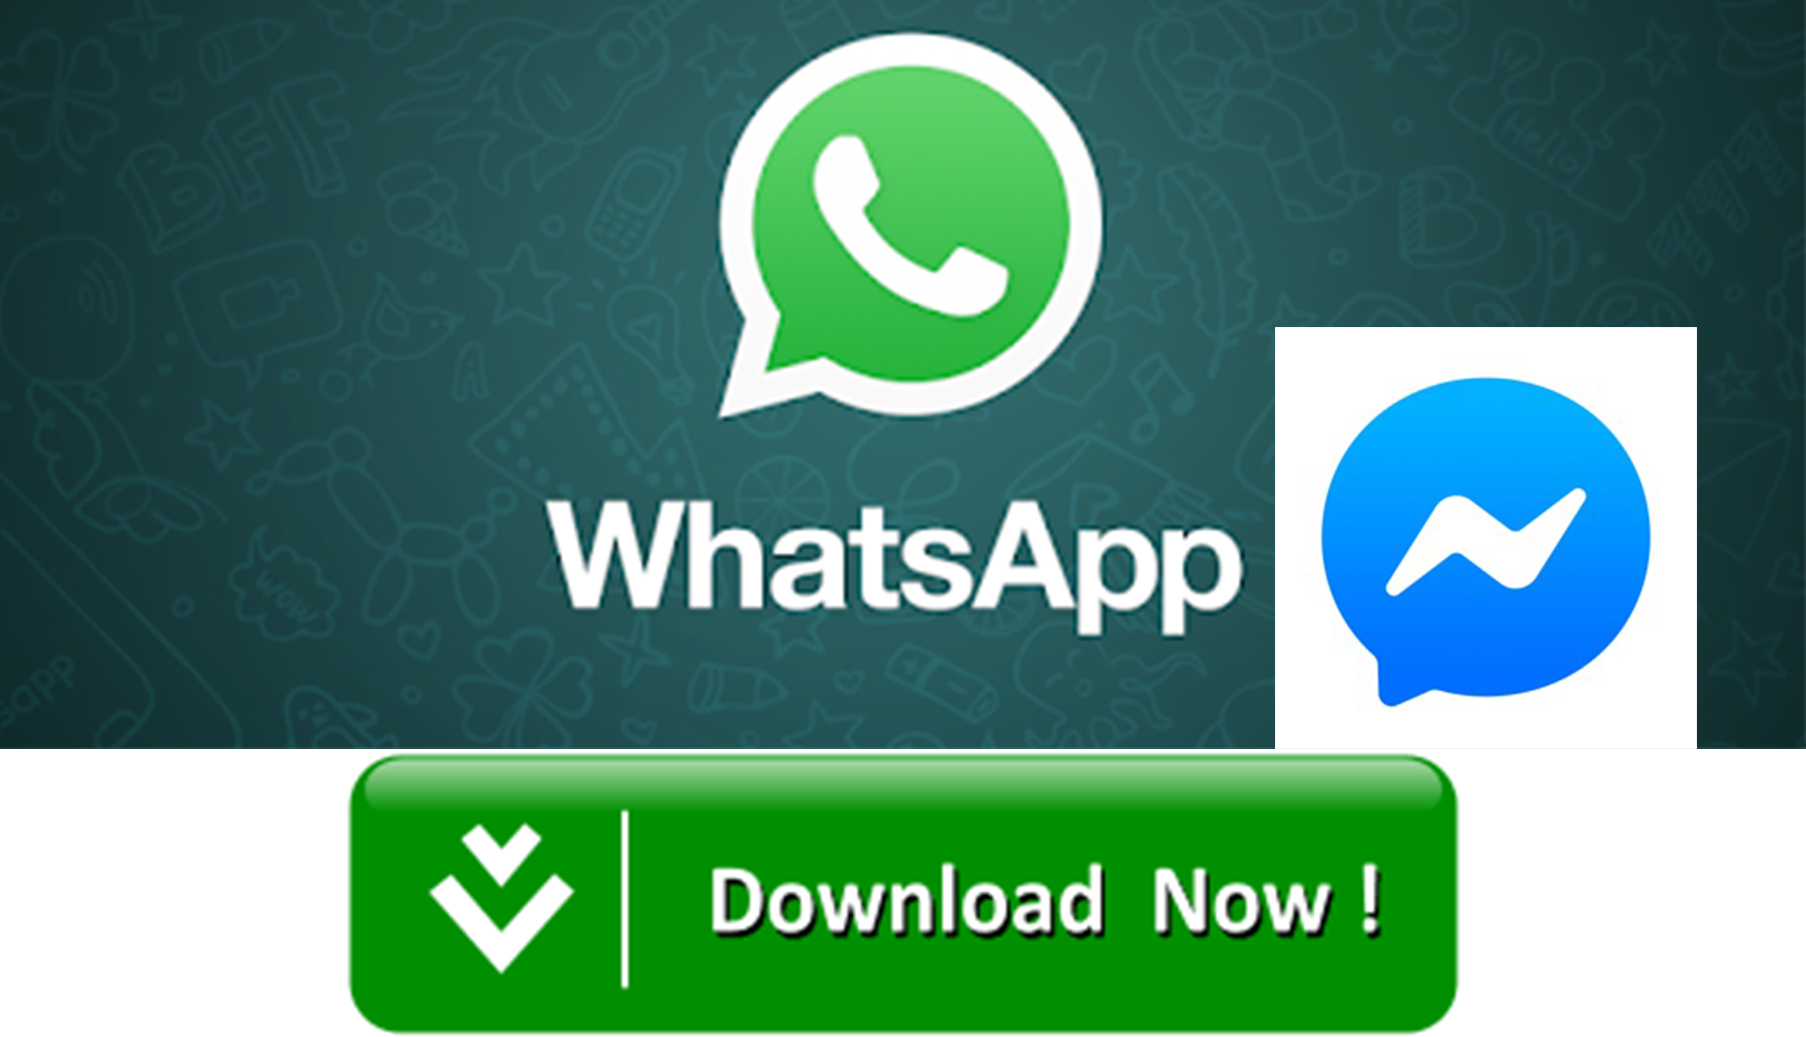 whatsapp free download windows 10